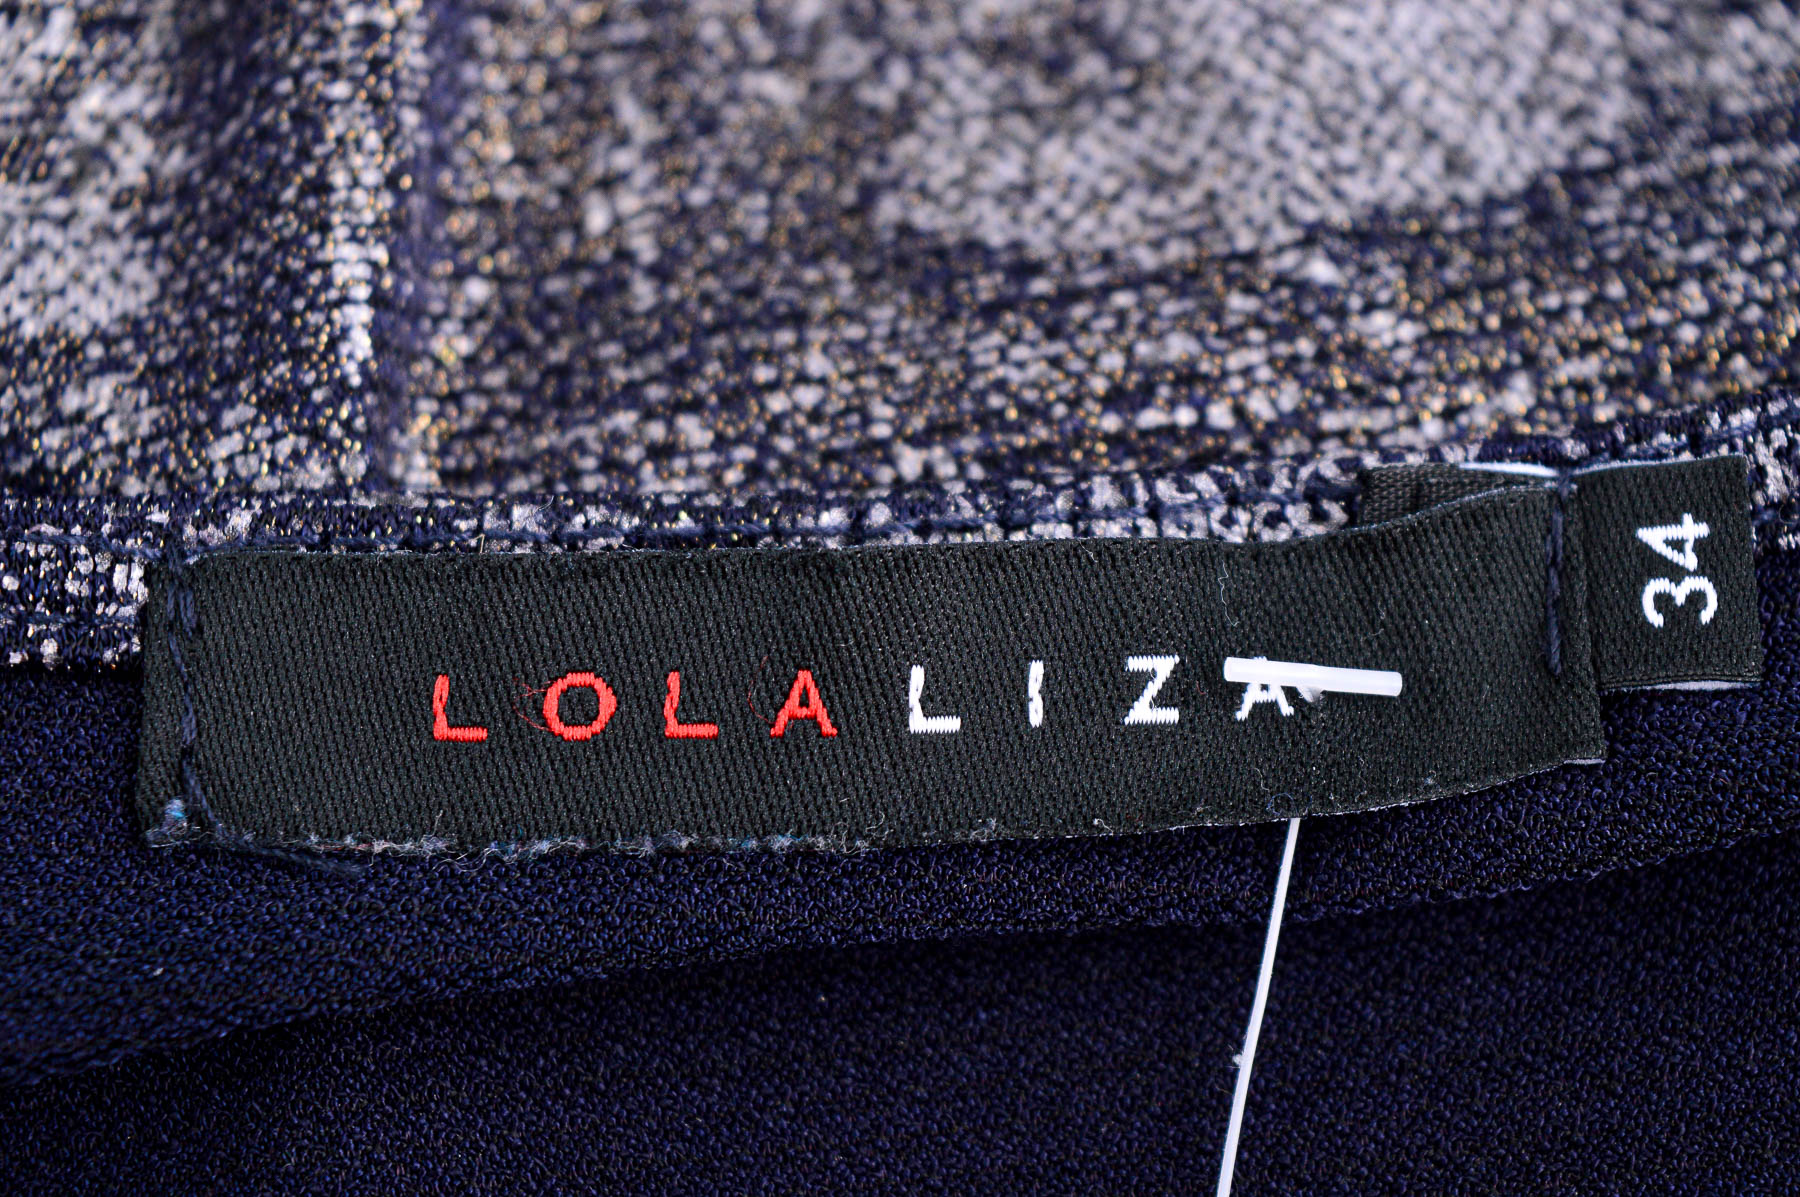 Women's blouse - LOLA LIZA - 2